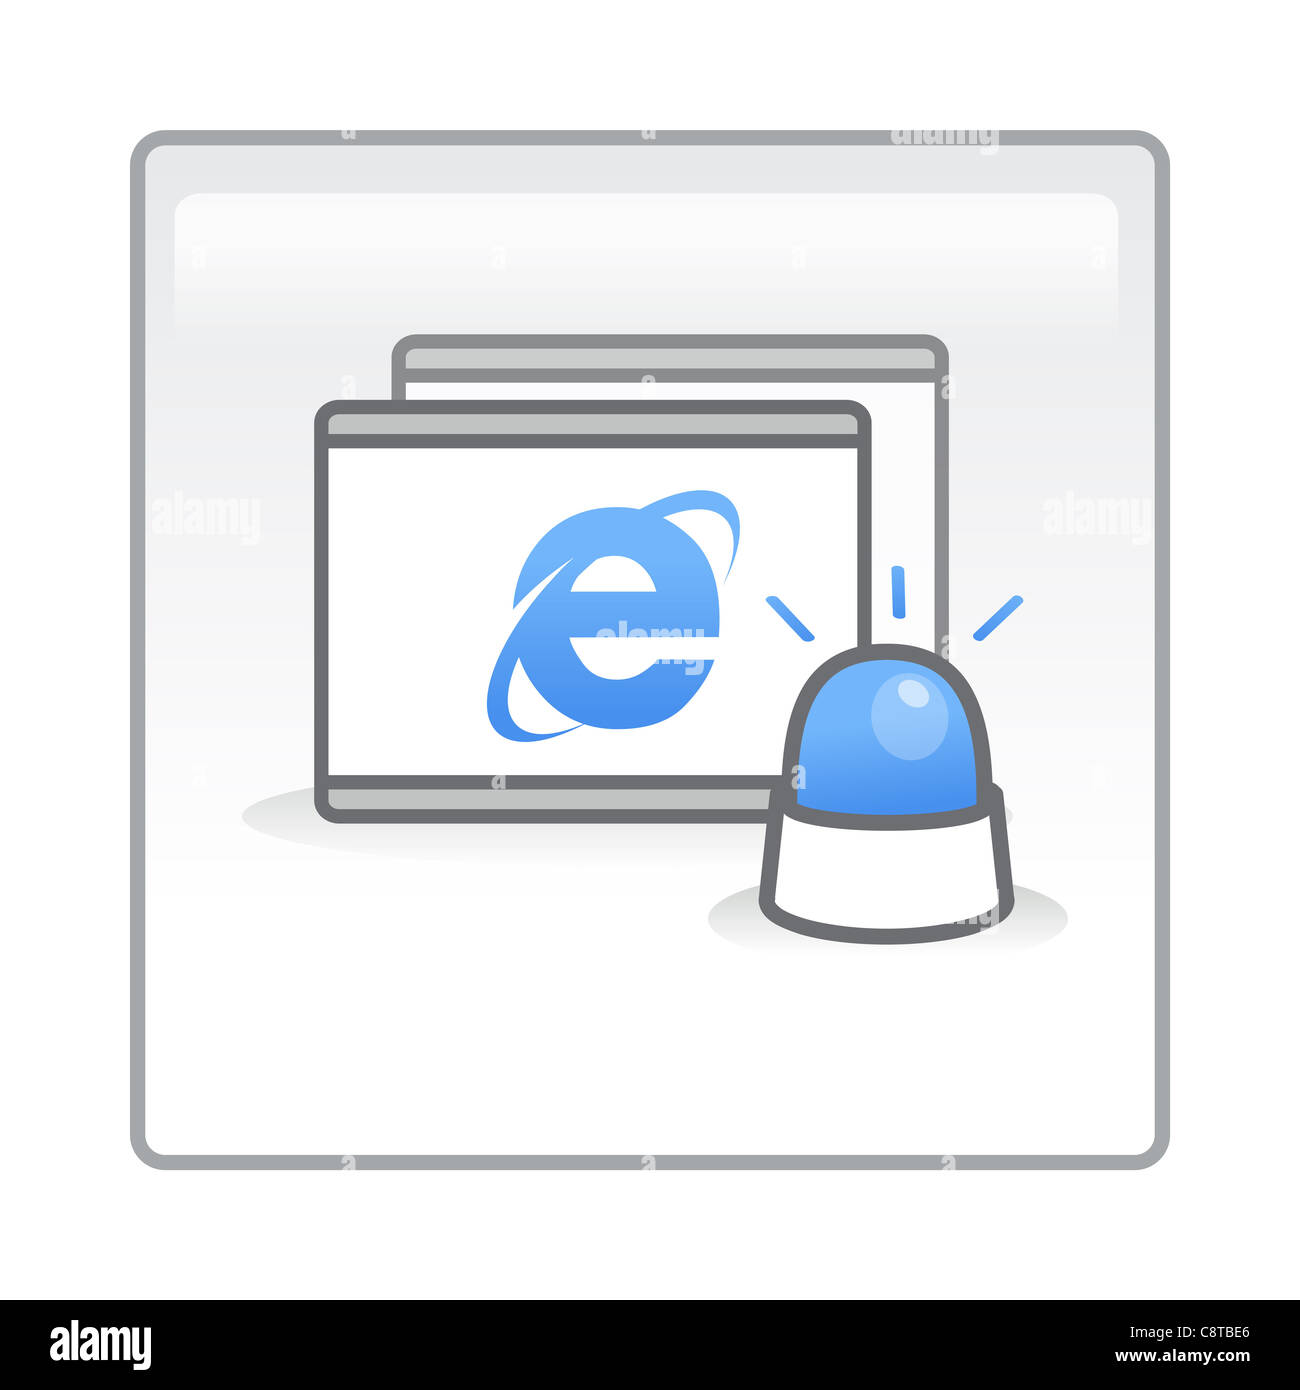 Illustration of file and internet explorer sign Stock Photo